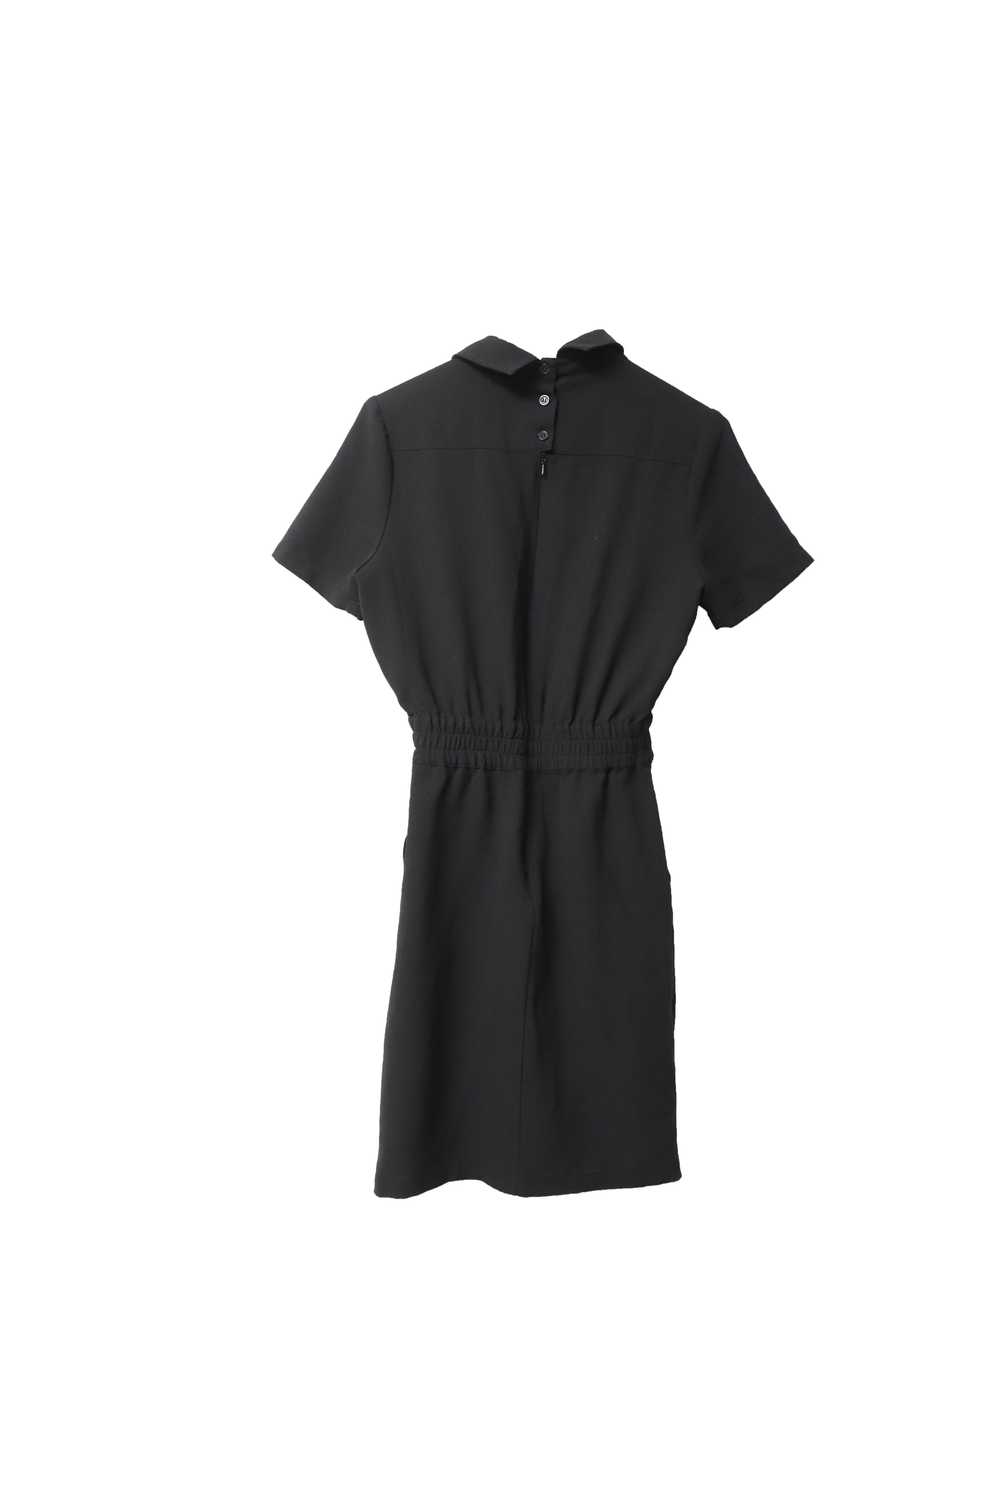 Ganni Black crepe collared mini dress - image 5